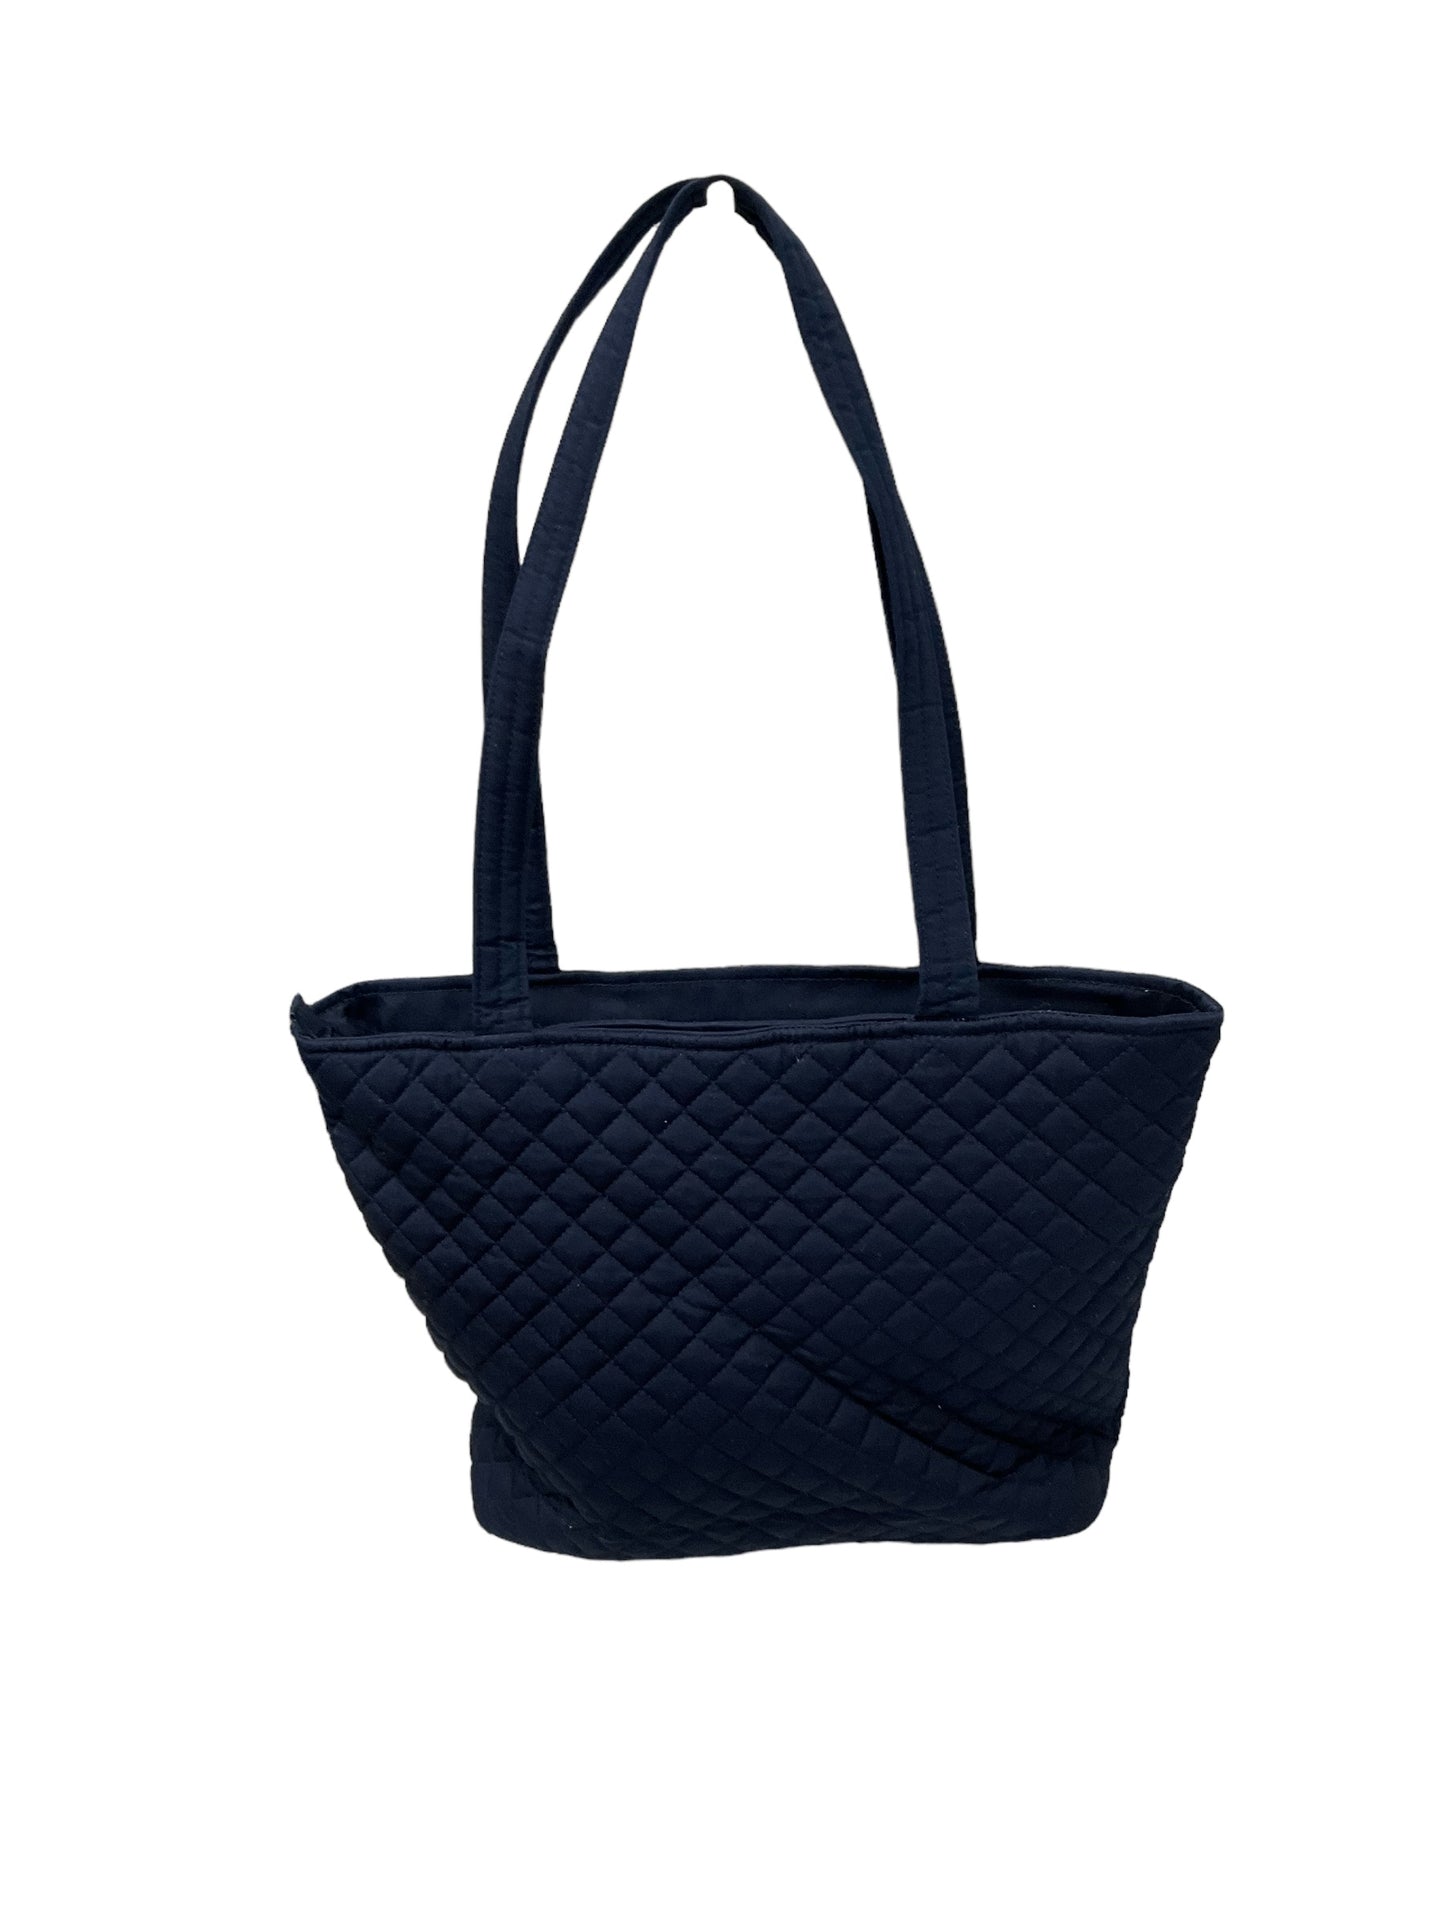 Handbag By Vera Bradley  Size: Medium